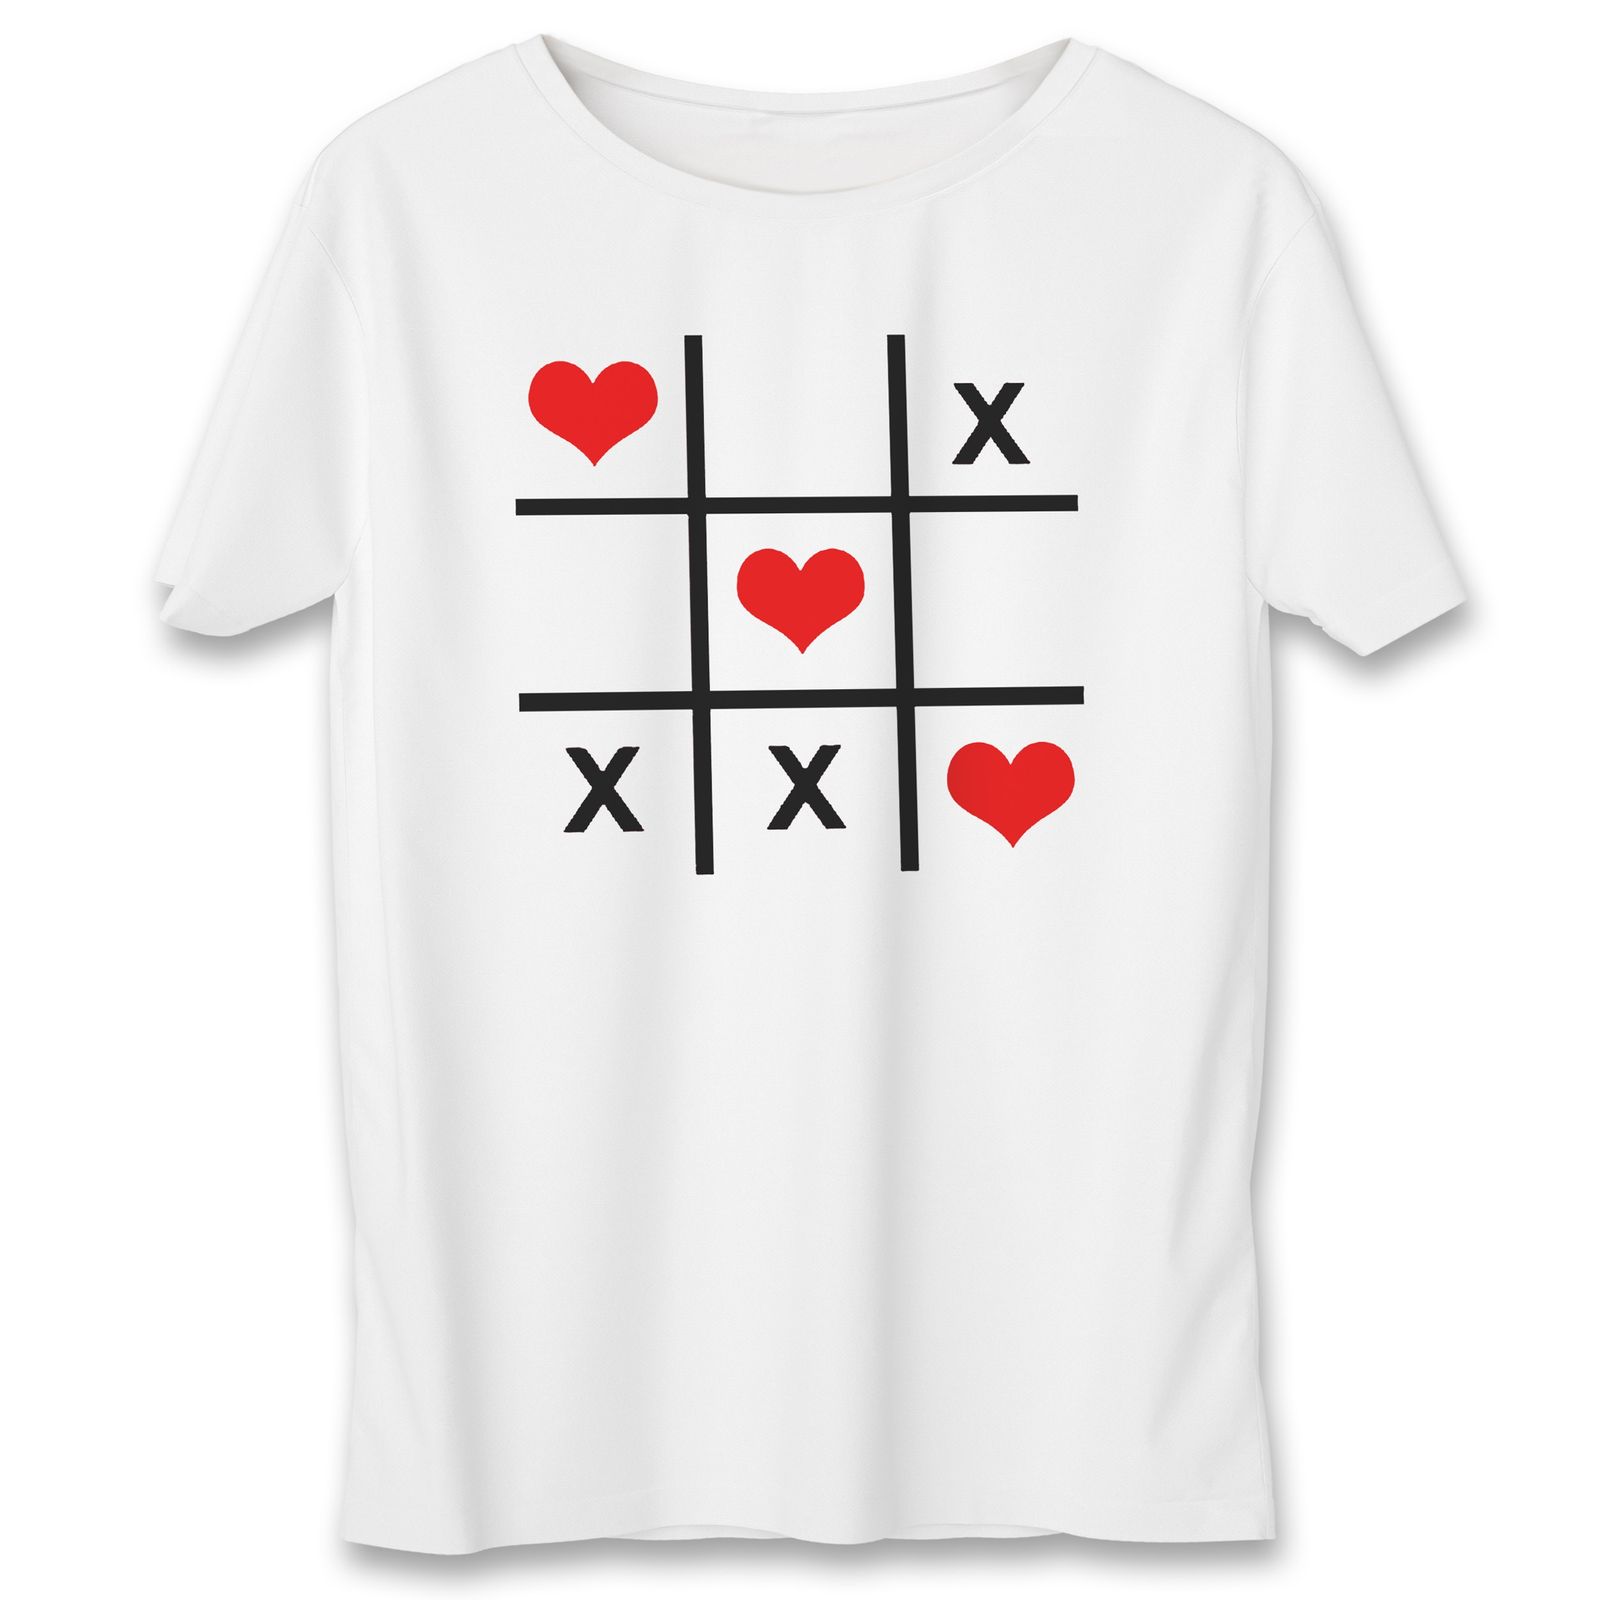 تی شرت زنانه به رسم طرح دور قلب کد 572 -  - 1